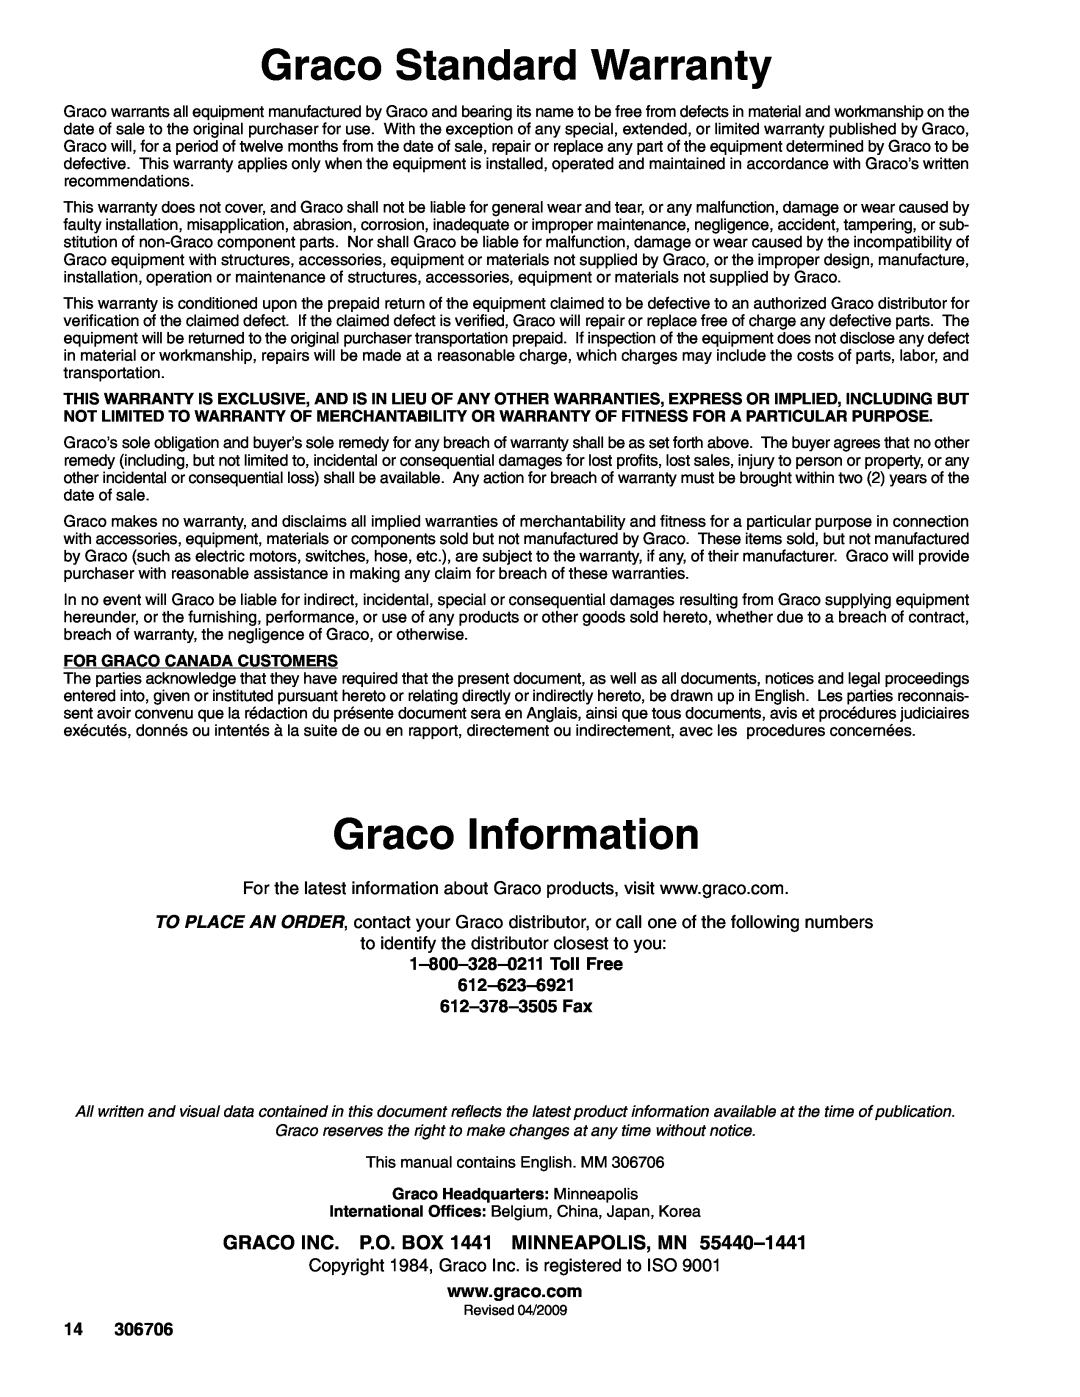 Graco Inc 231063, 306706W Graco Standard Warranty, Graco Information, GRACO INC. P.O. BOX 1441 MINNEAPOLIS, MN 